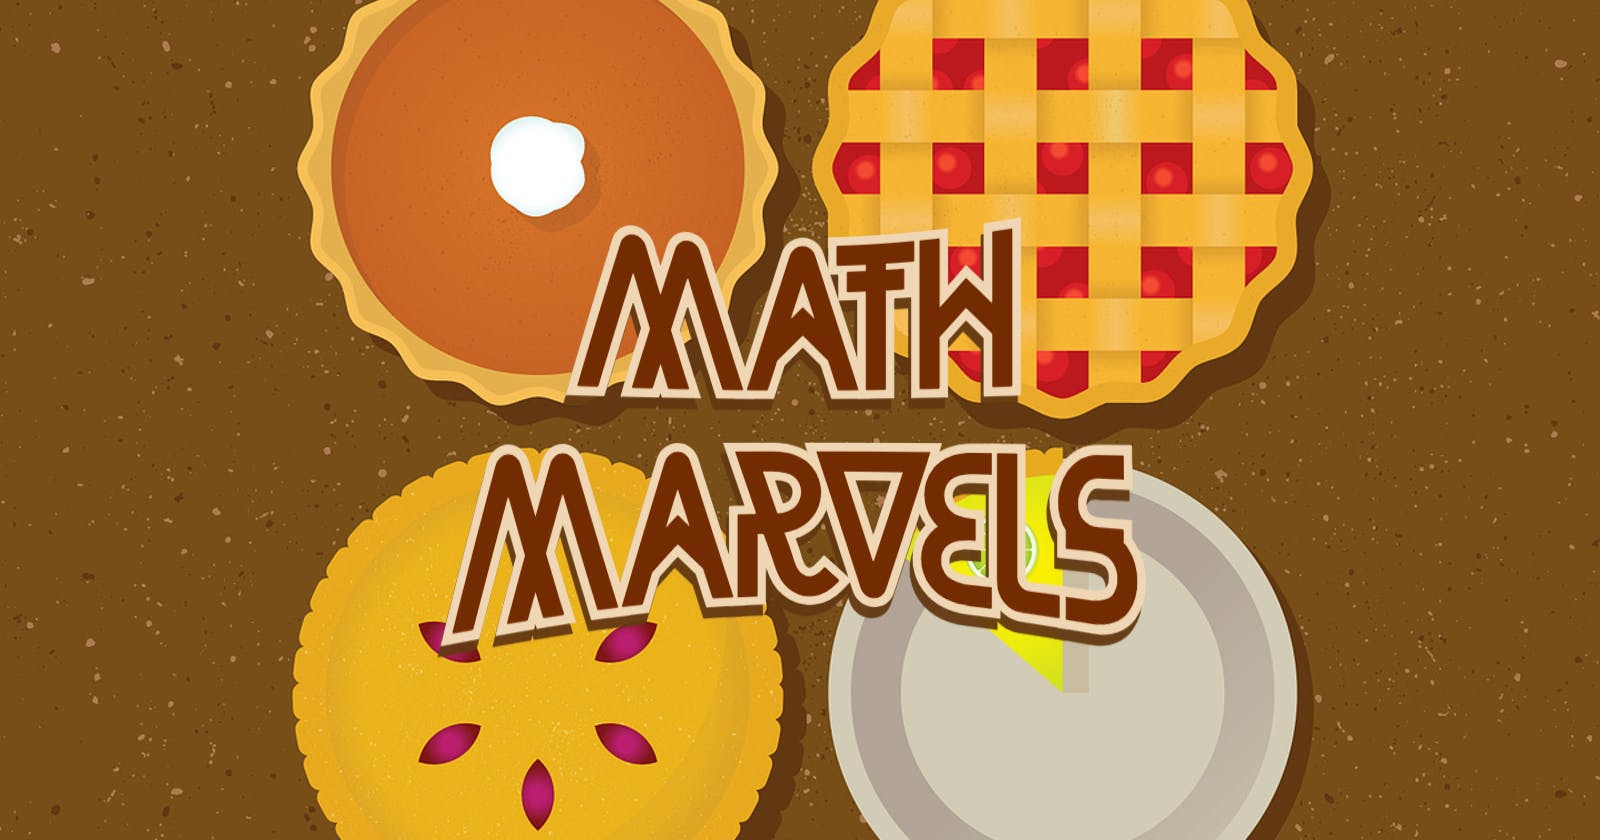 Math Marvels